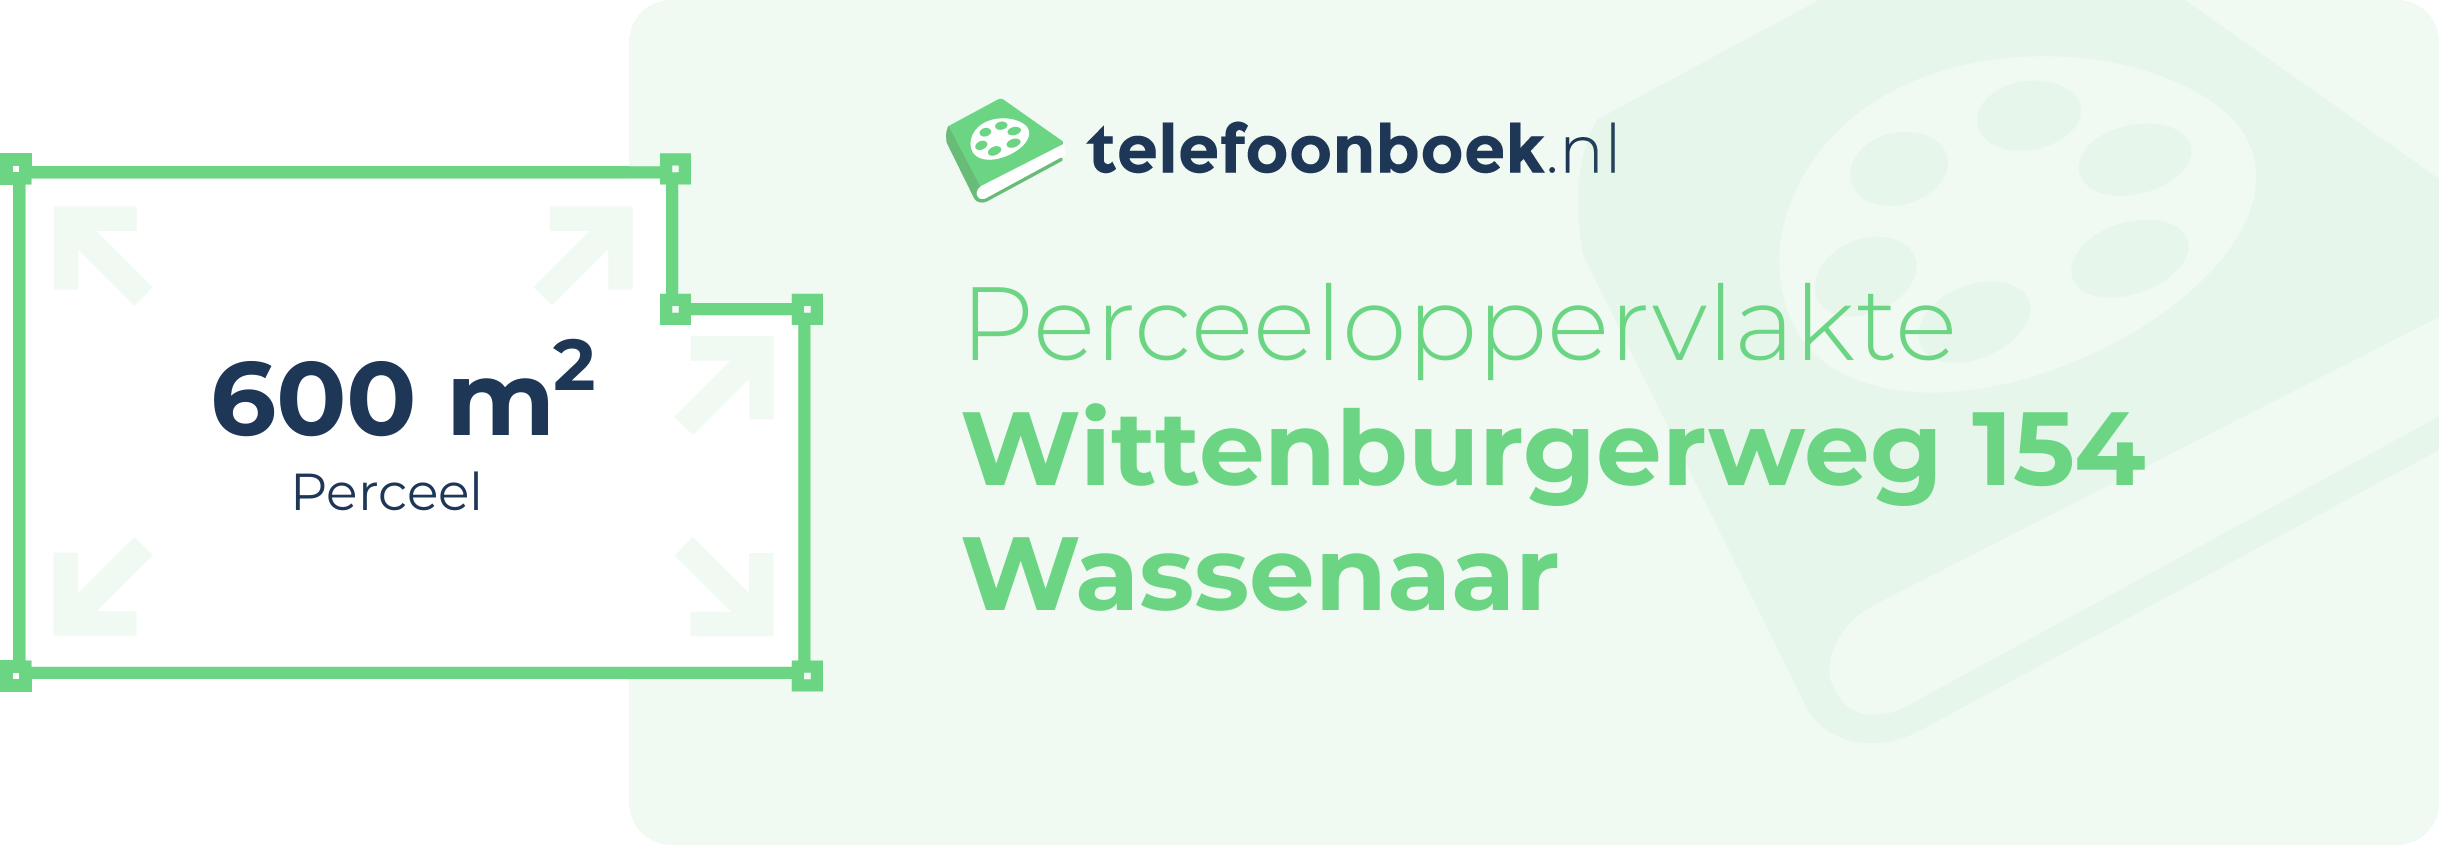 Perceeloppervlakte Wittenburgerweg 154 Wassenaar